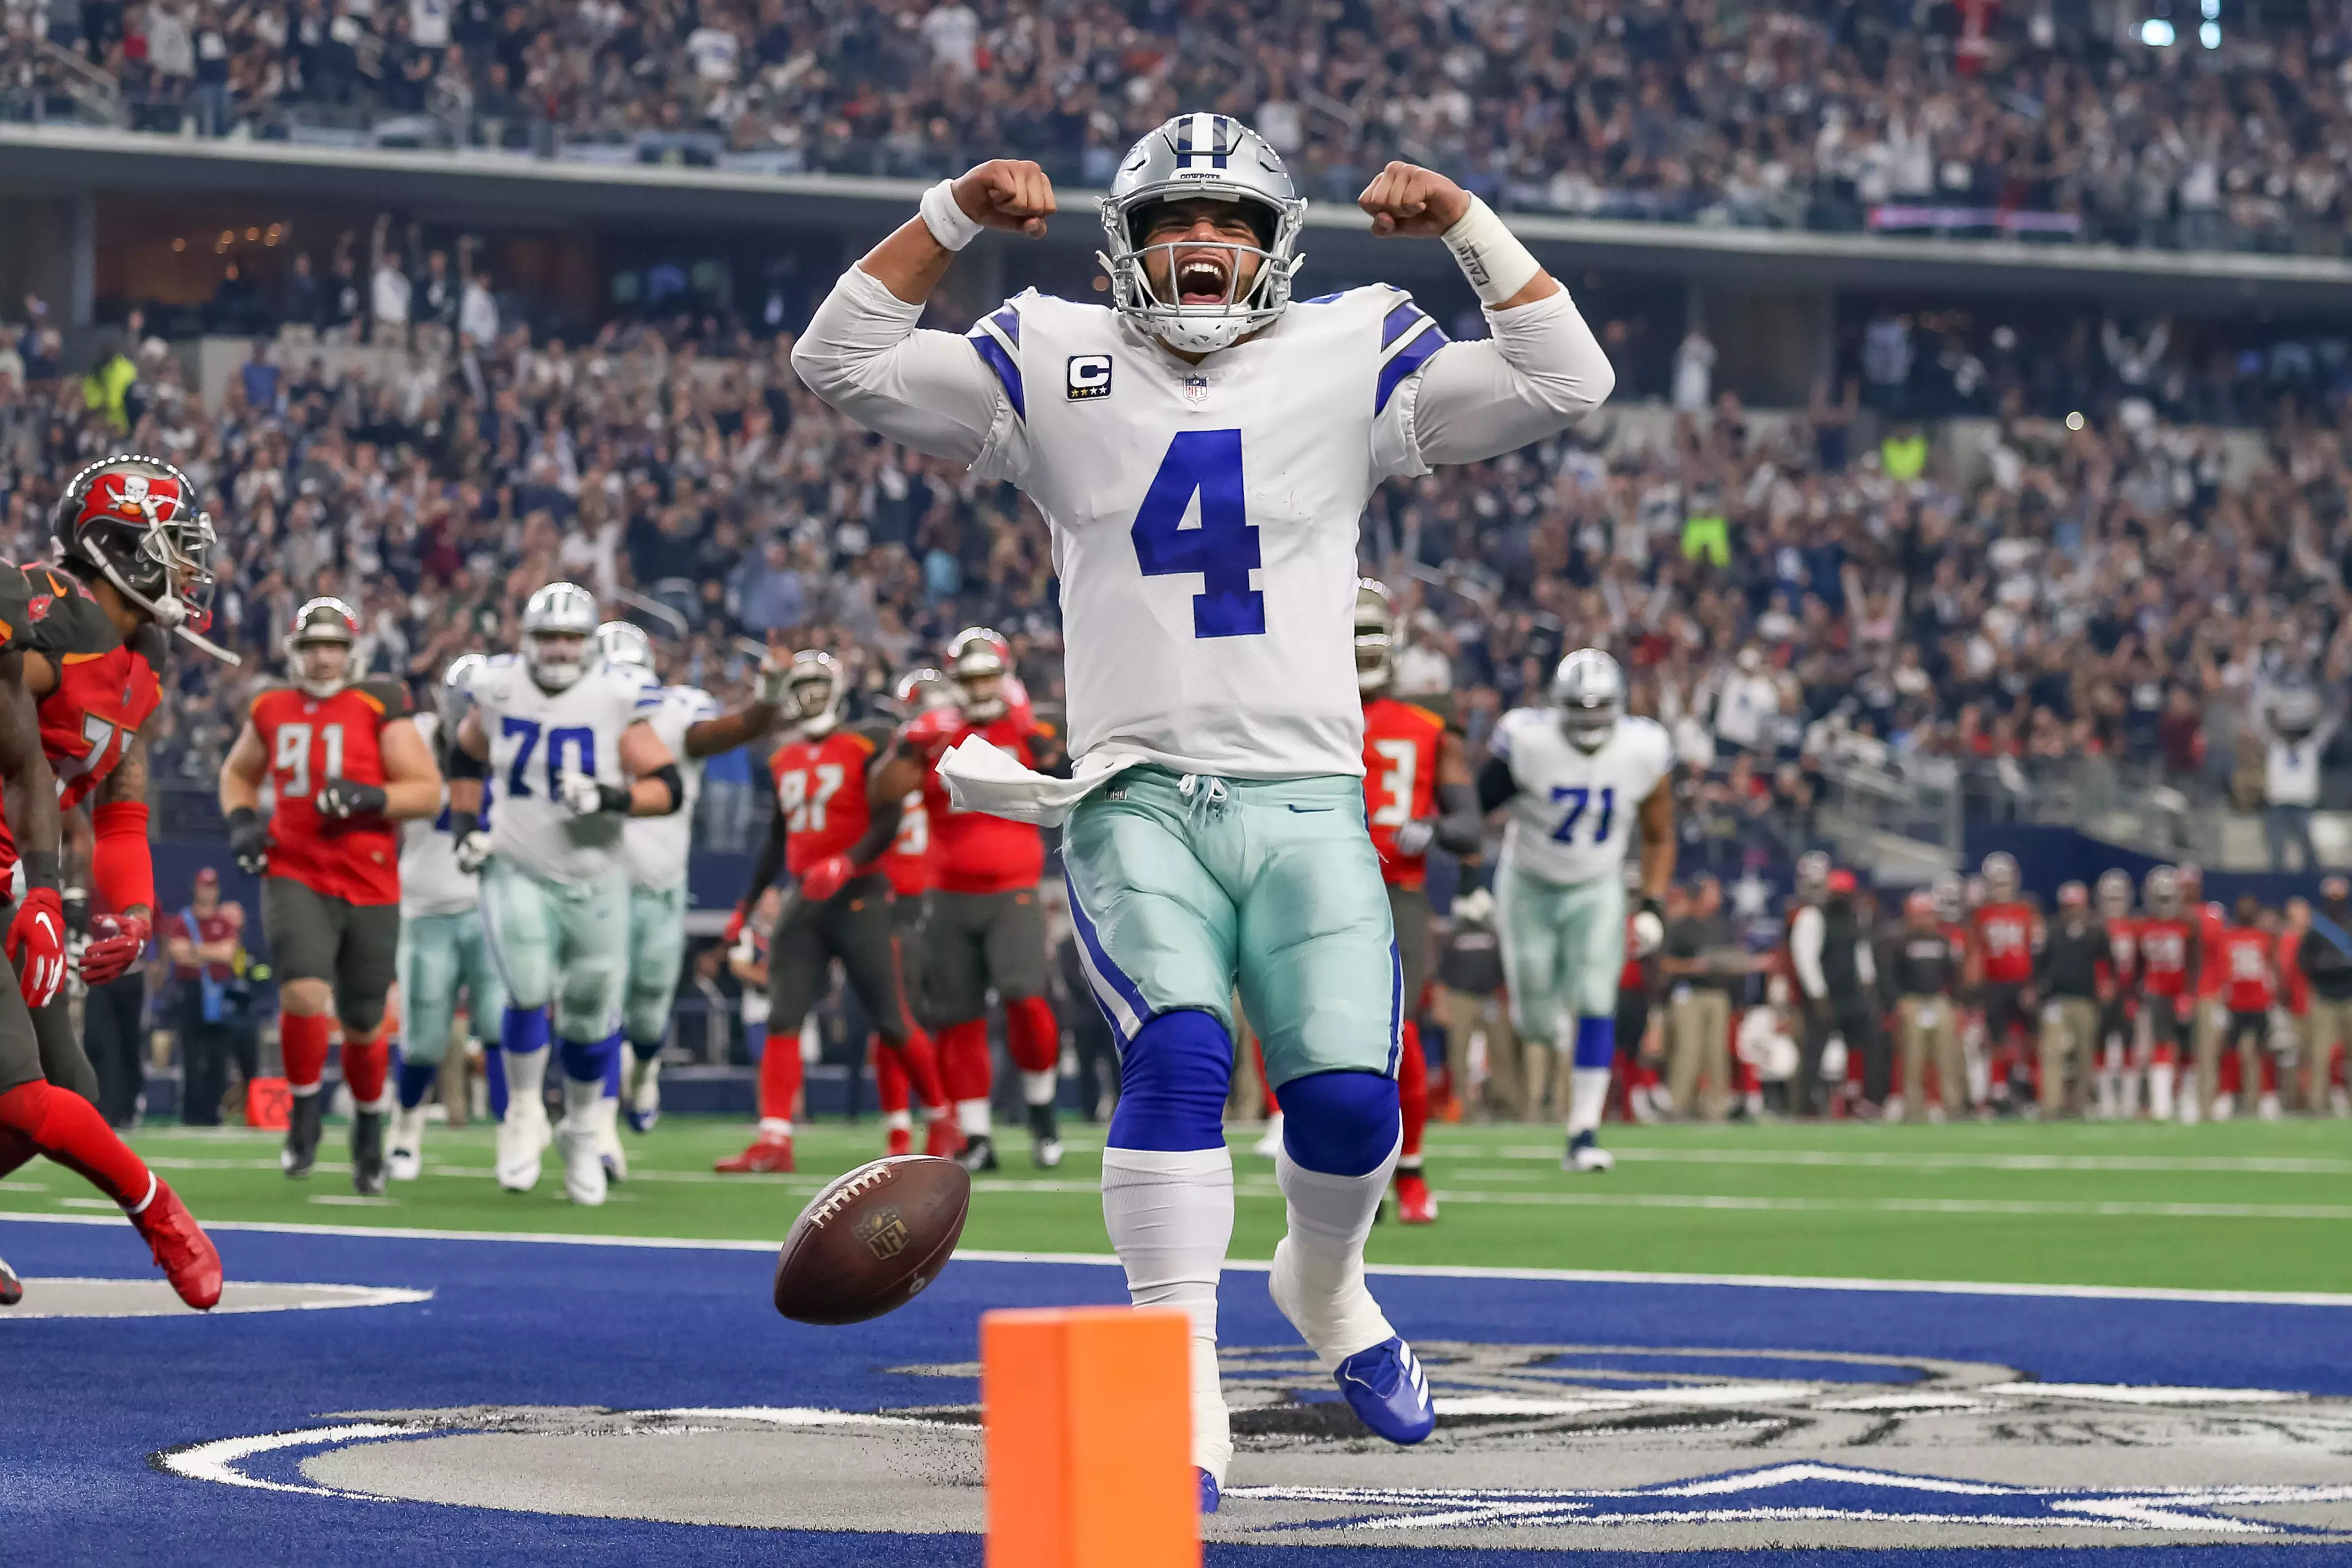 Dak Prescott celebrates after scoring a touchdown for the Dallas Cowboys